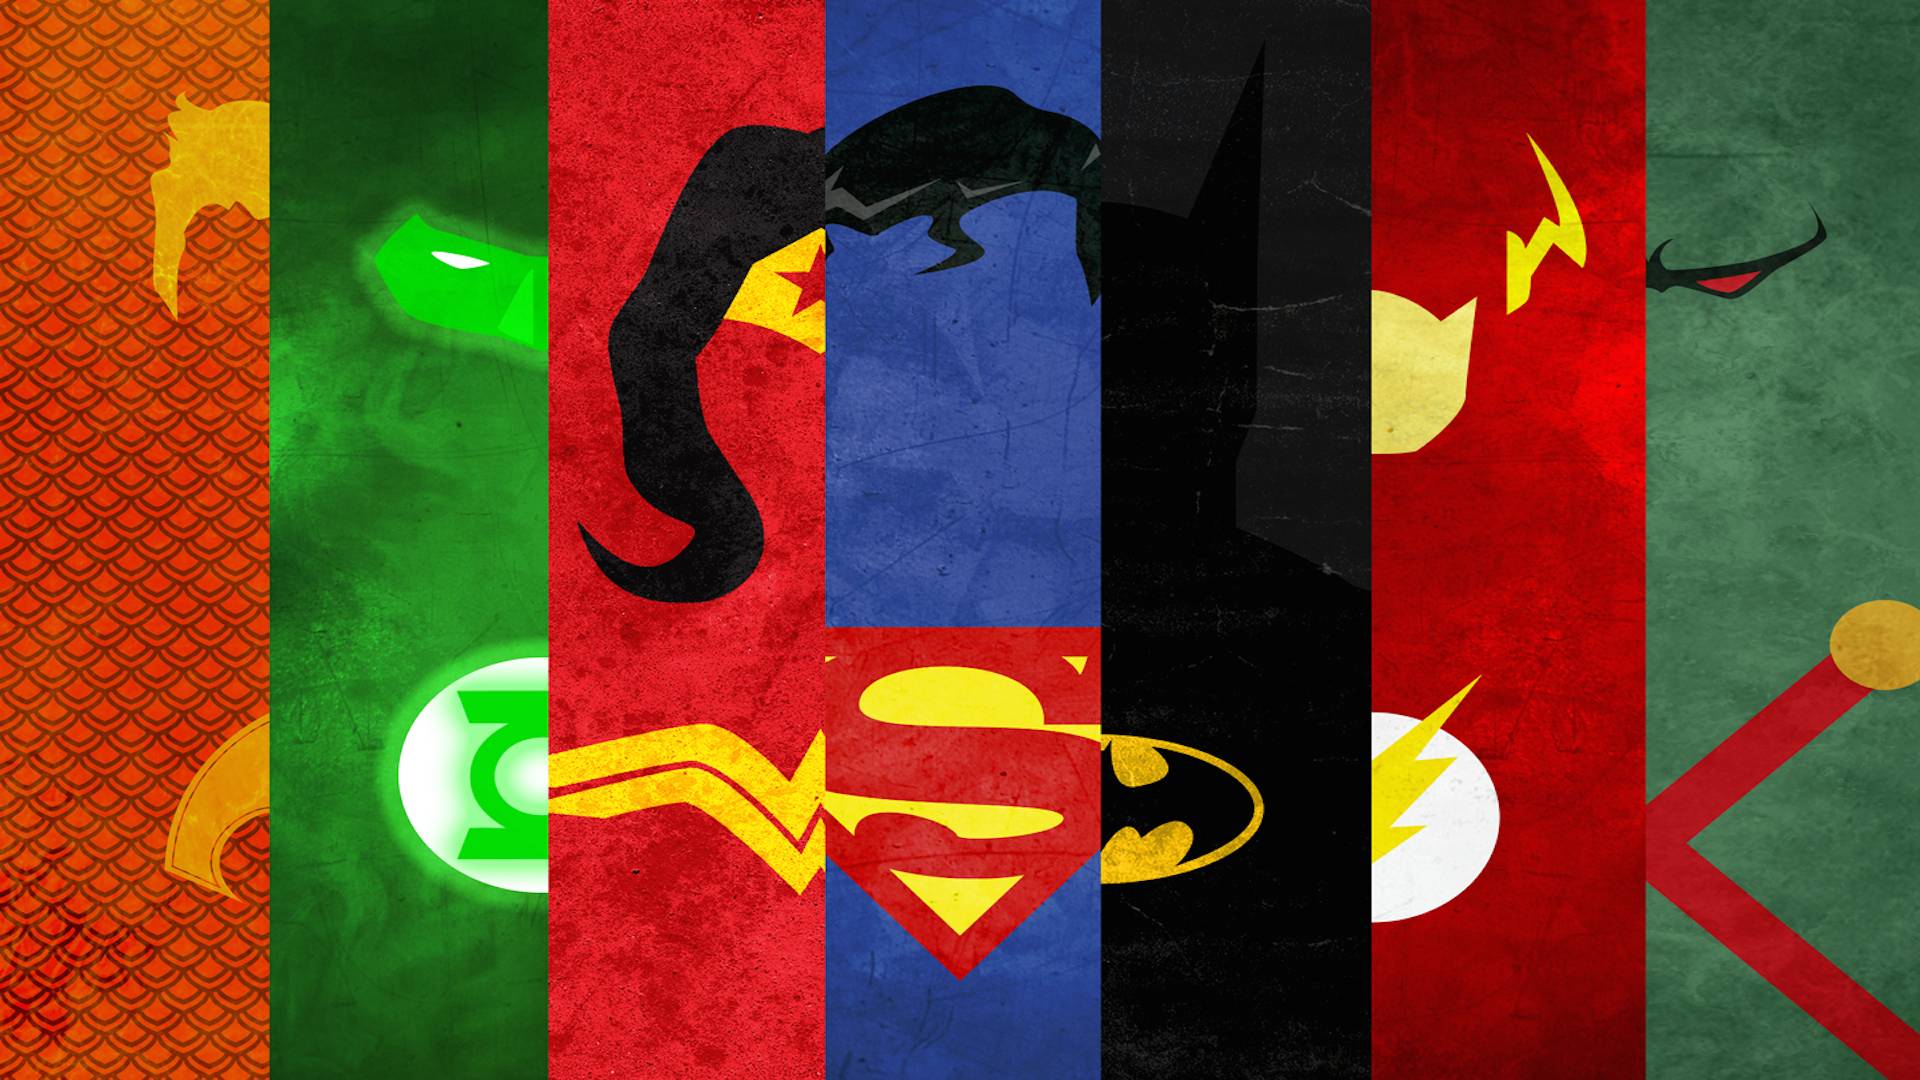 Justice League iPhone Wallpaper